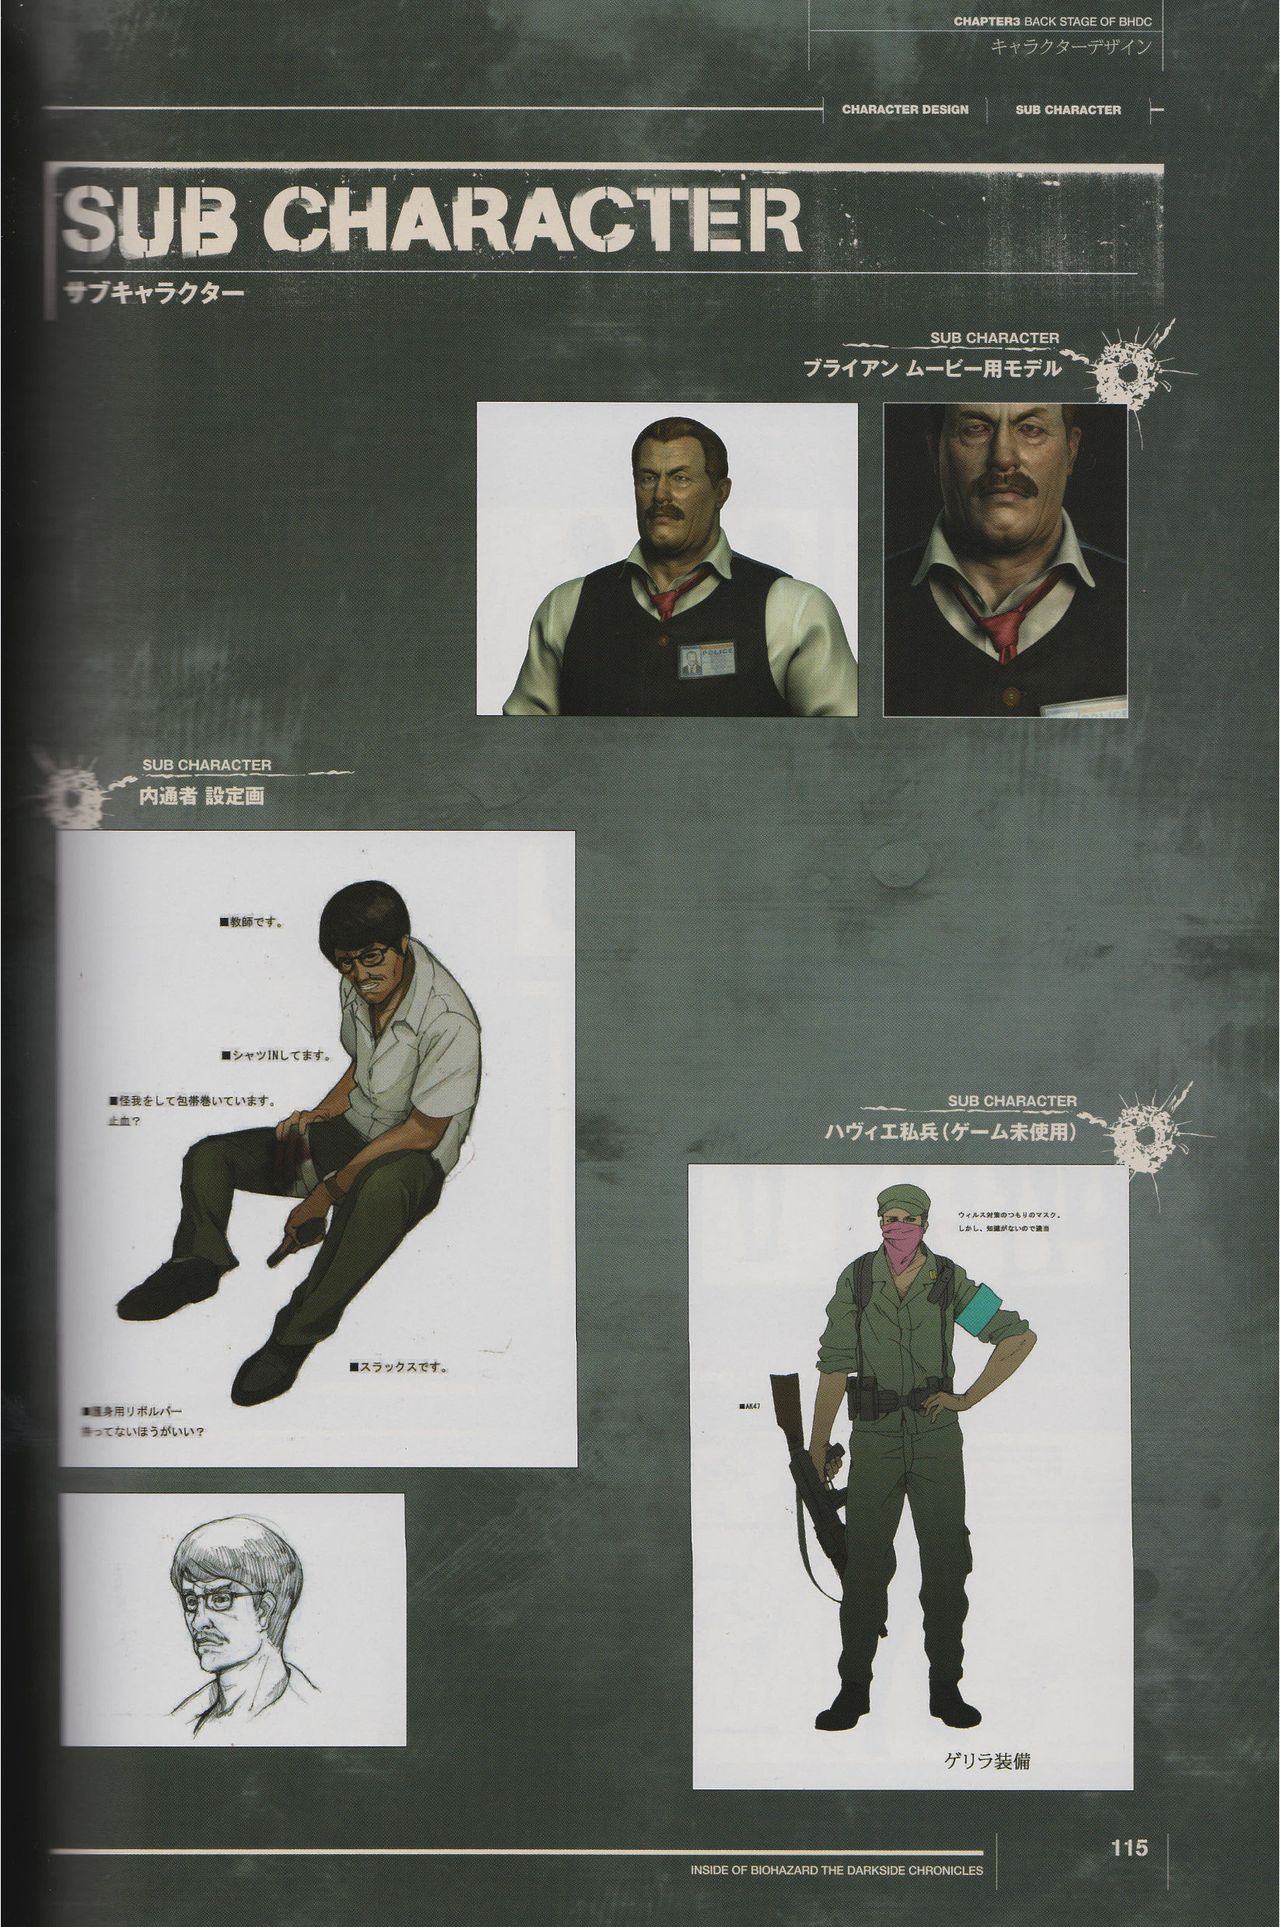 Resident Evil: The Darkside Chronicles Artbook 115